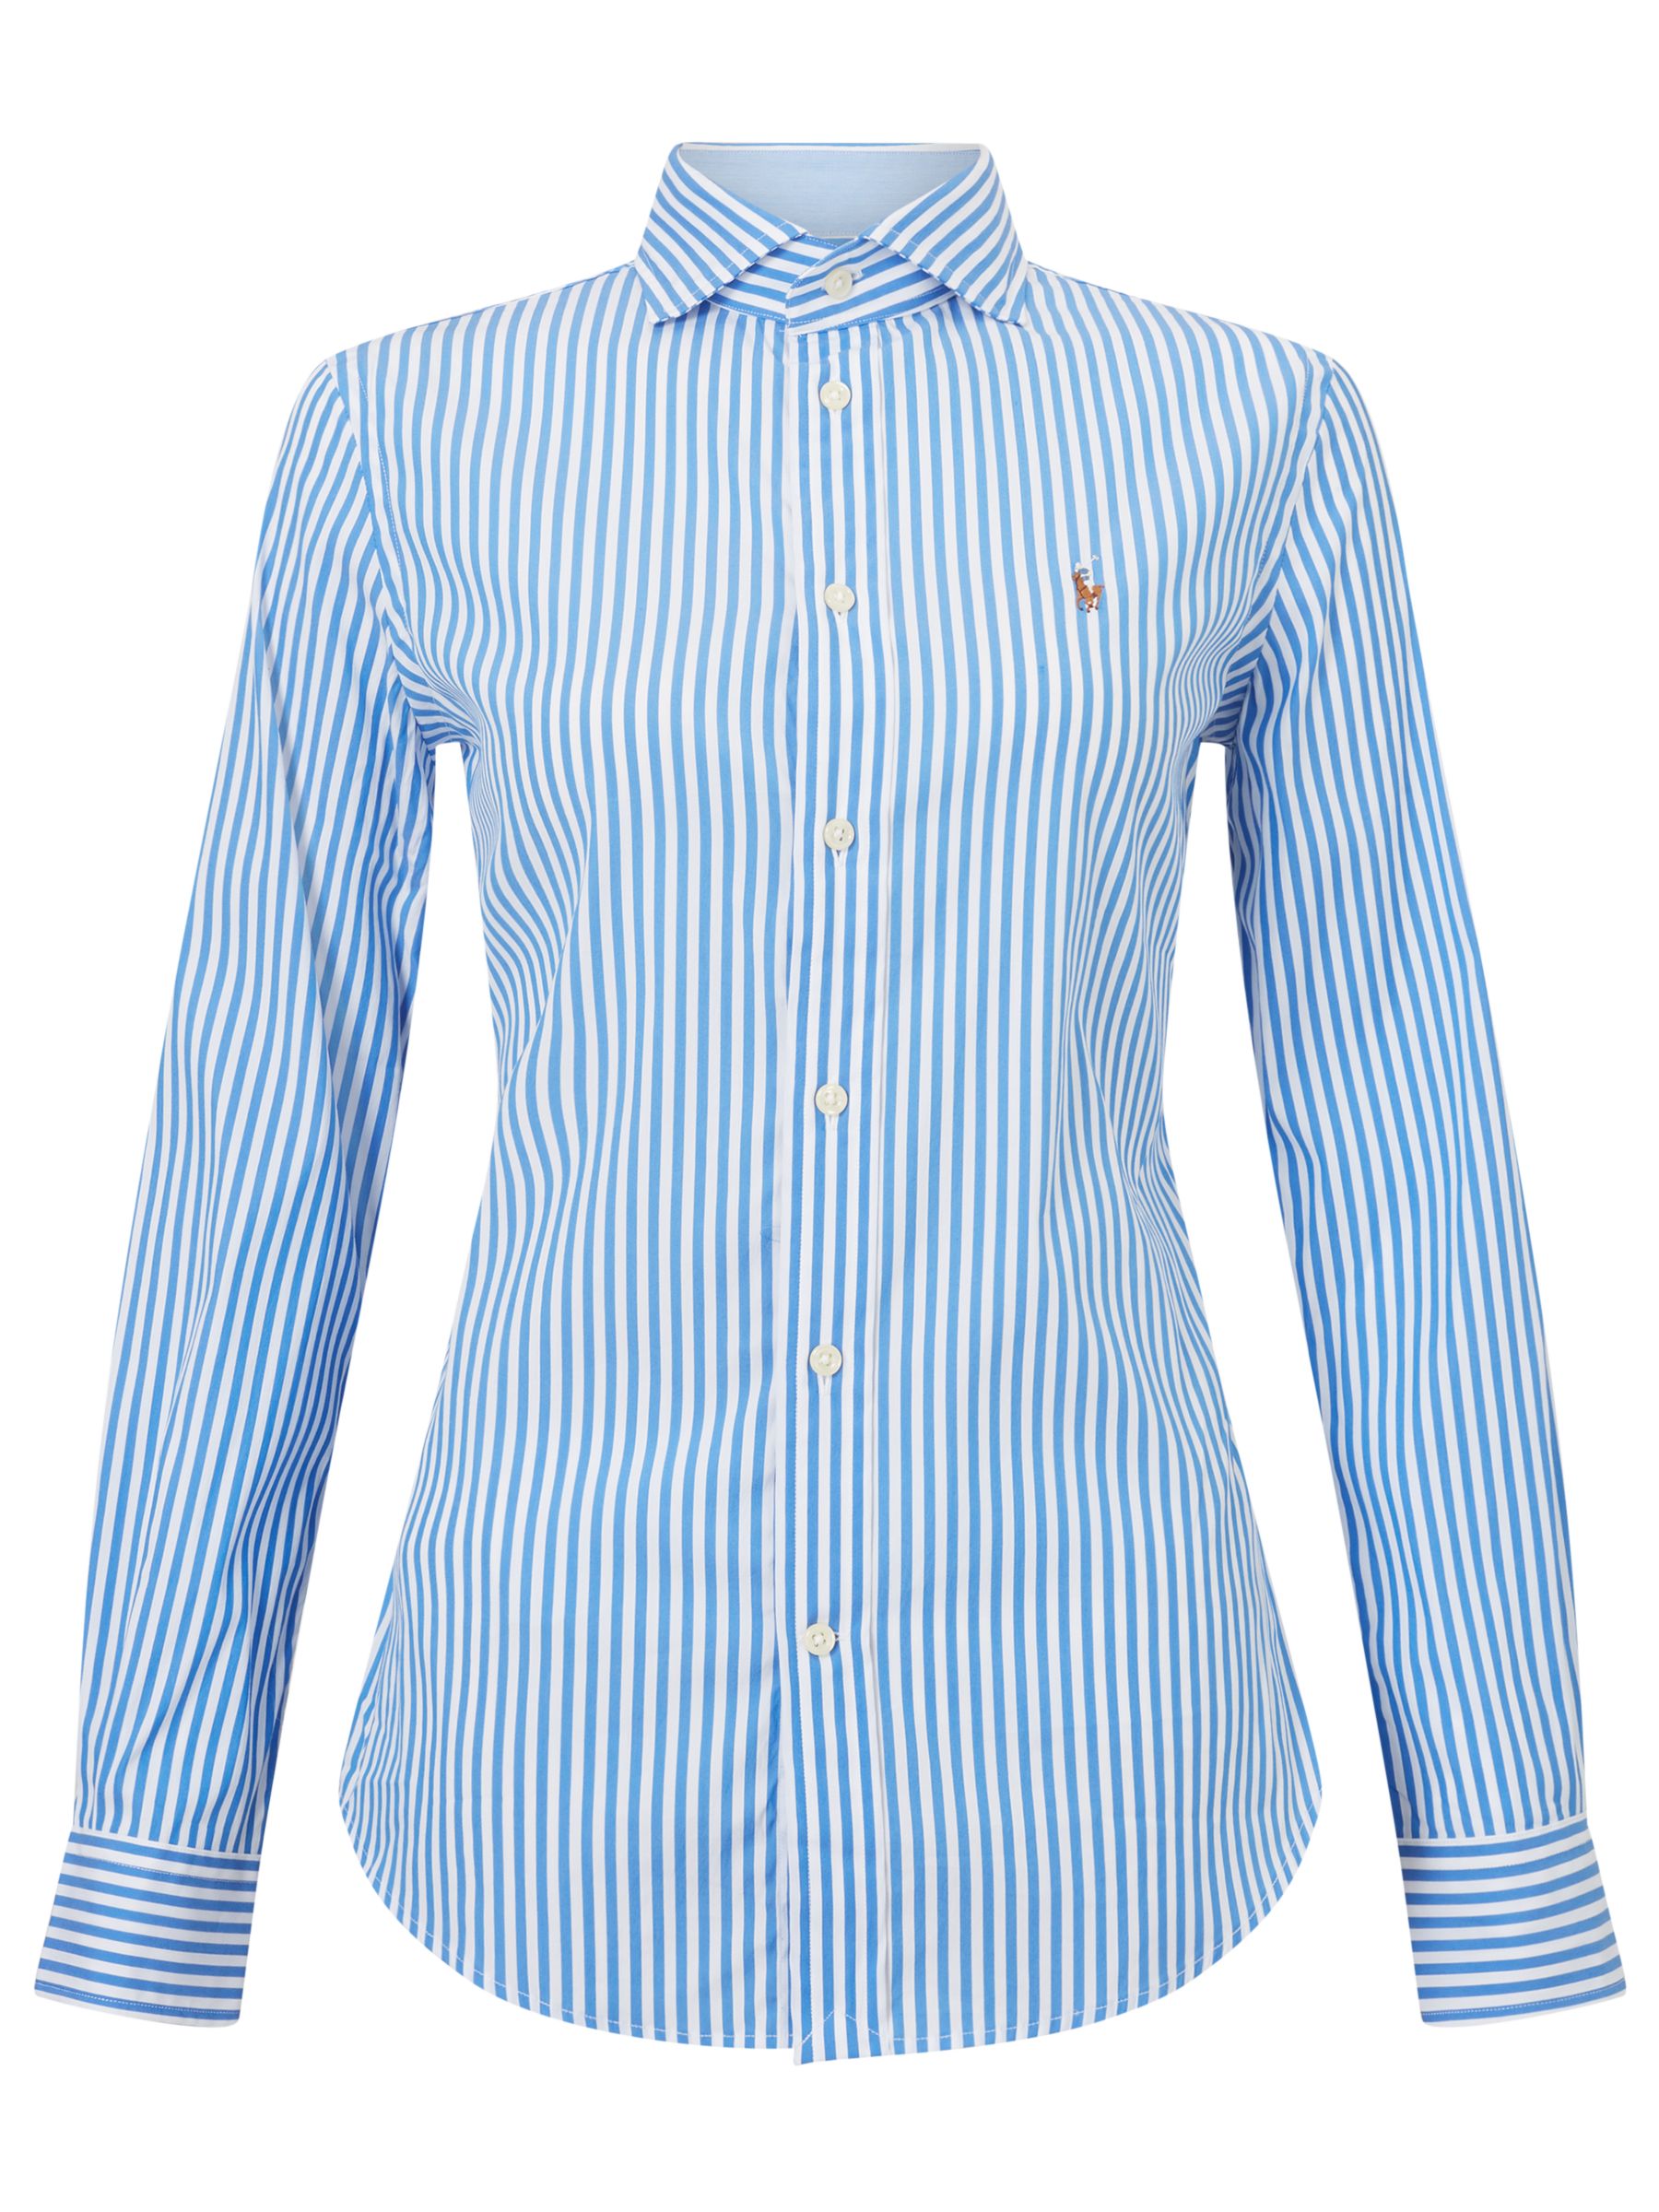 Polo Ralph Lauren Stretch Slim-Fit Stripe Shirt, Blue/White at John ...